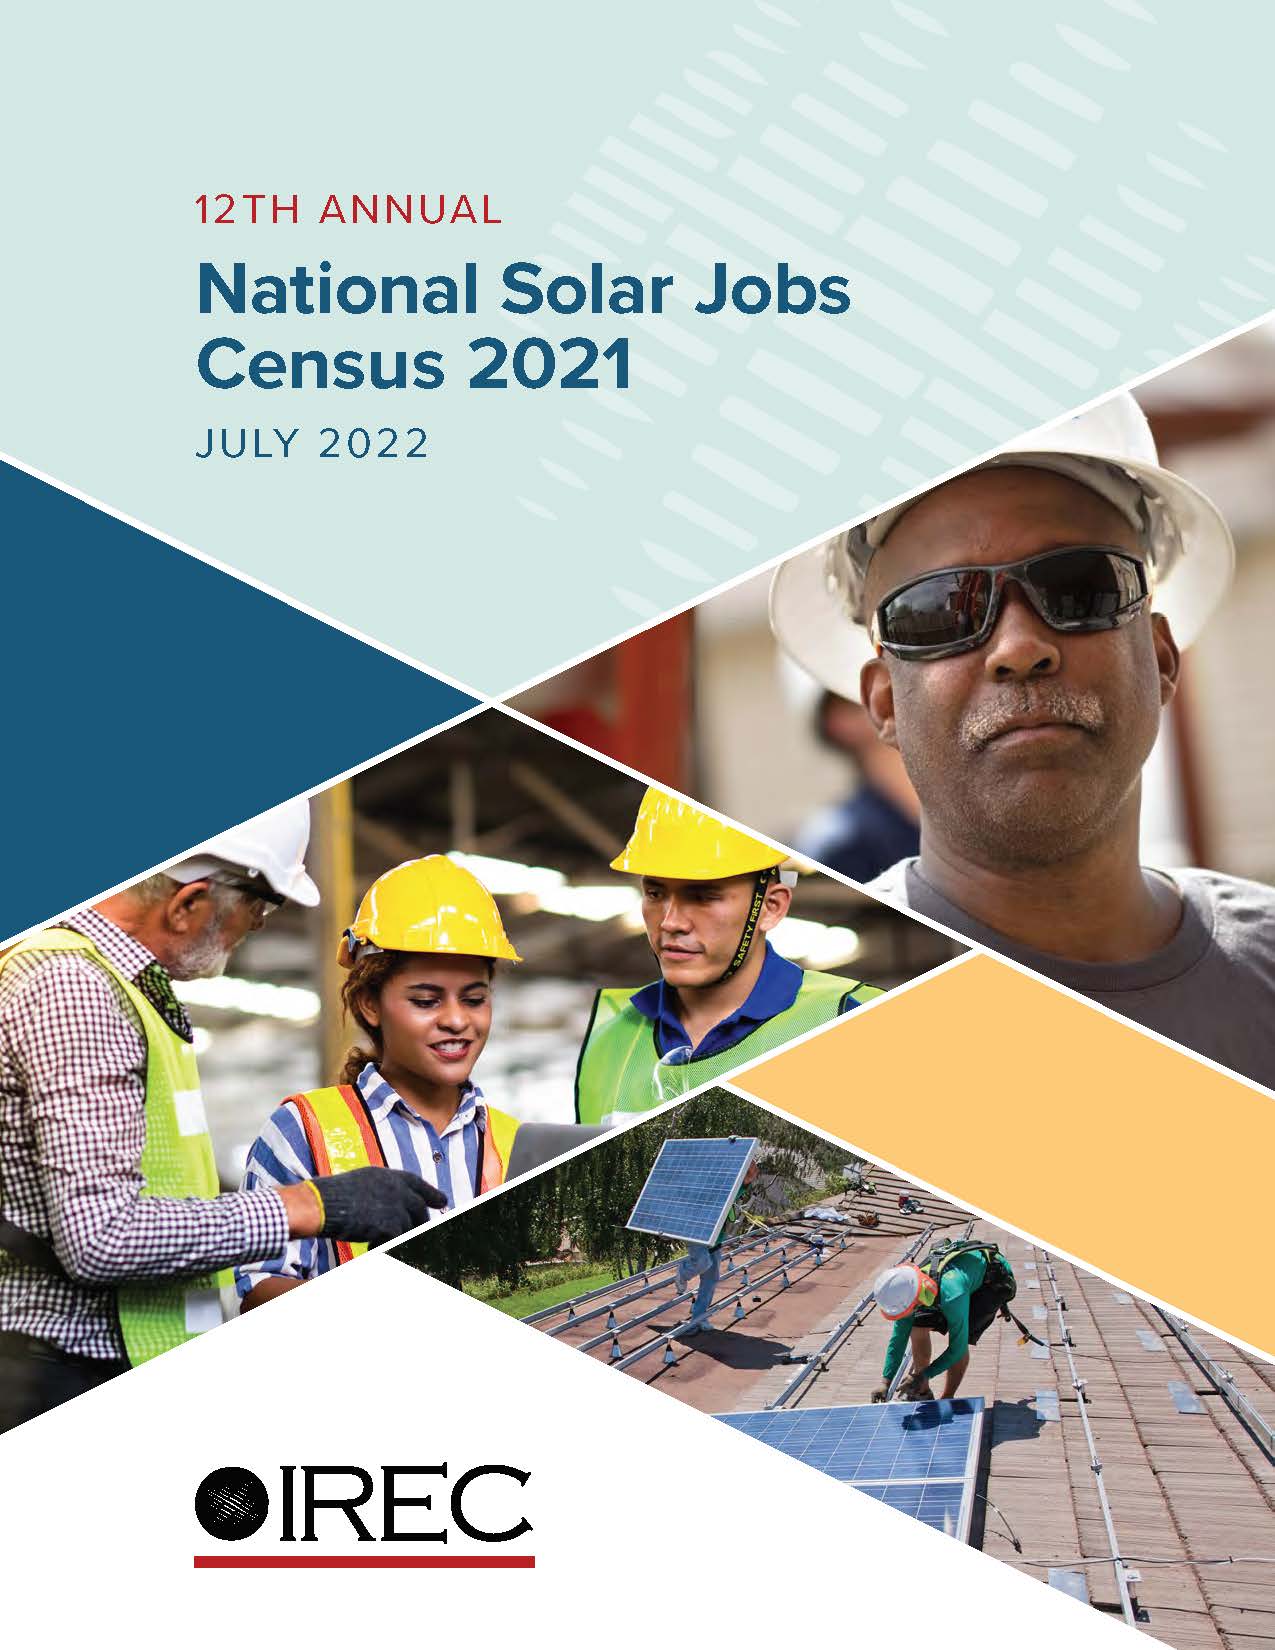 National Solar Jobs Census 2021